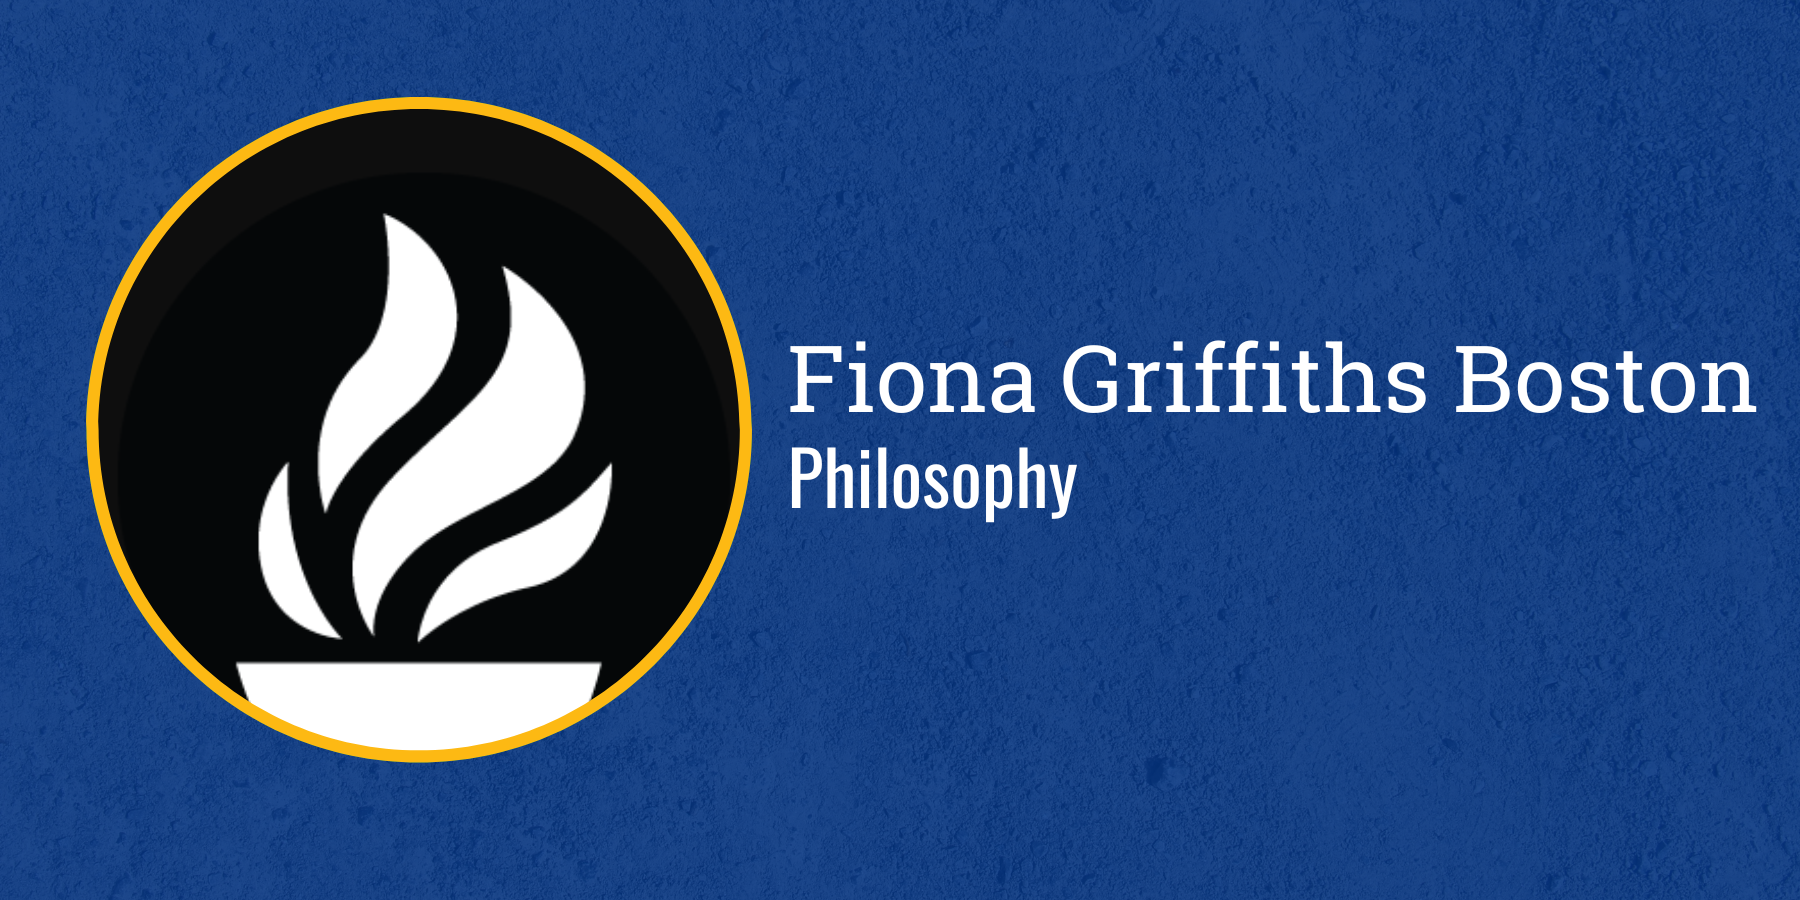 Fiona Griffiths Boston
Philosophy